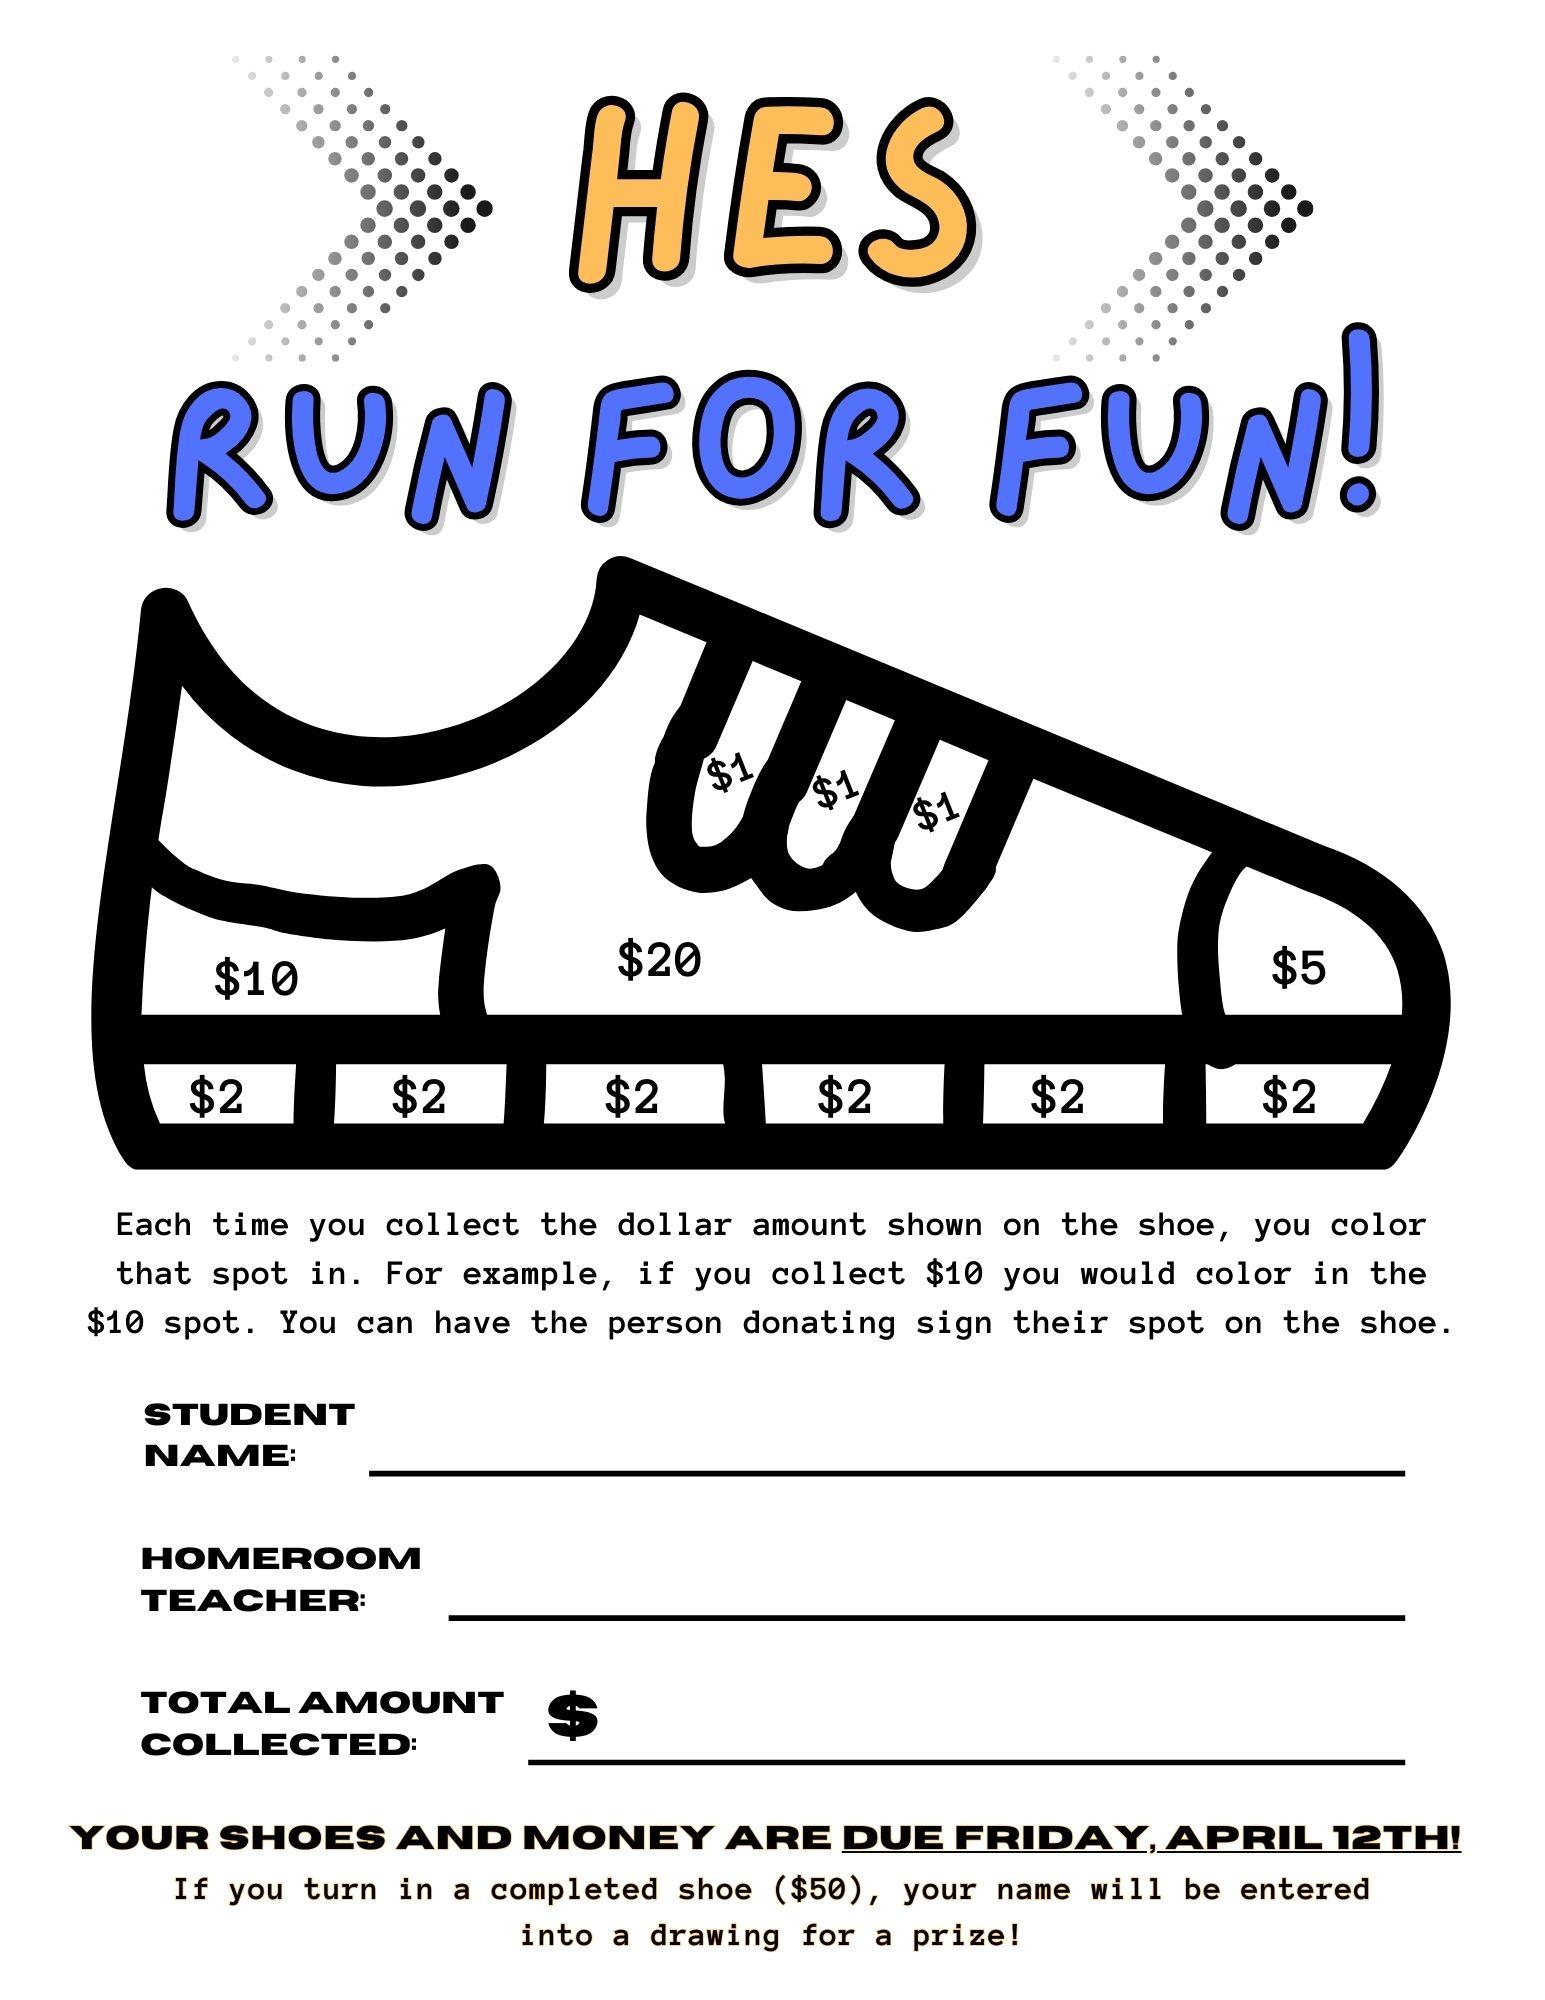 Run for Fun Flyer